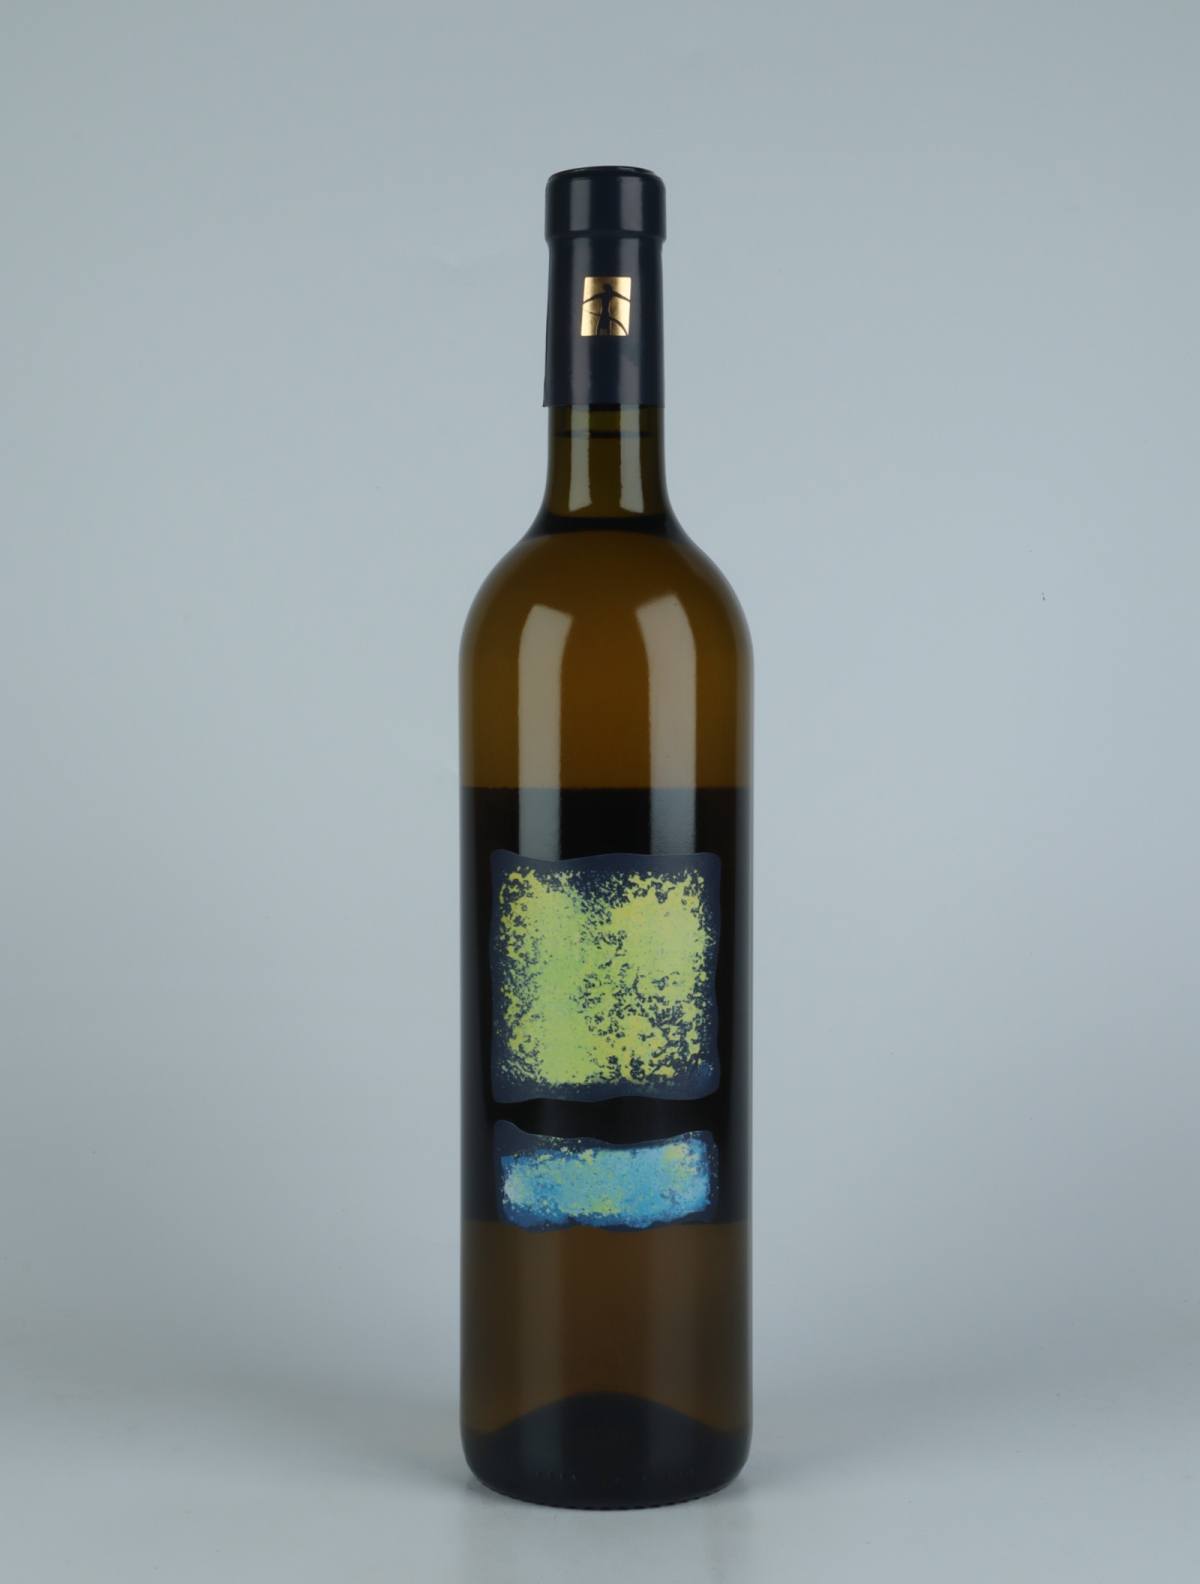 A bottle 2020 VB1 Orange wine from Tenuta Selvadolce, Liguria in Italy